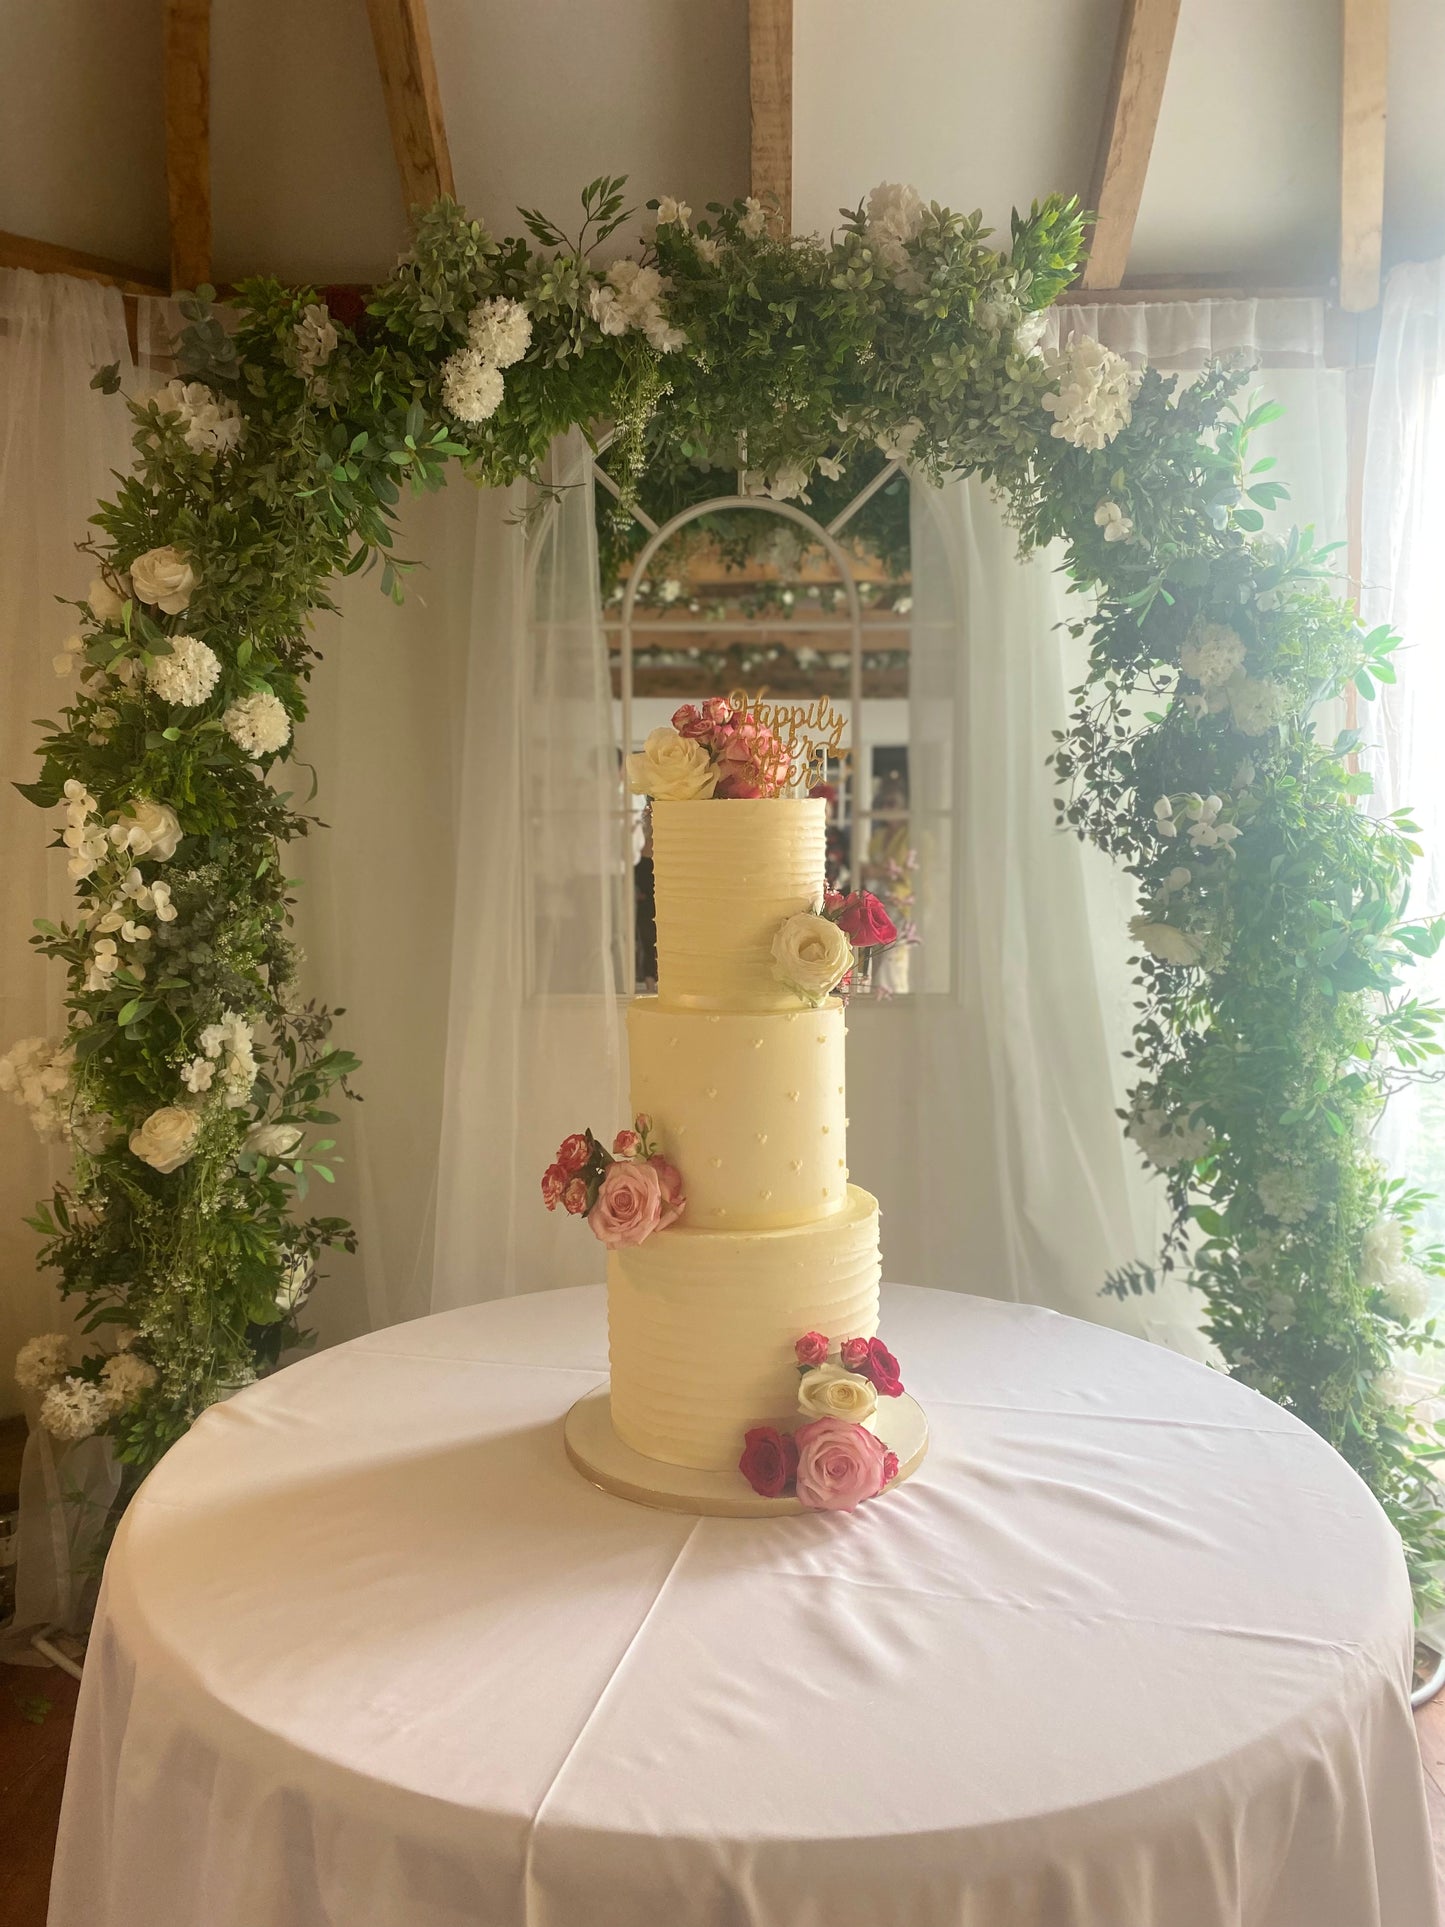 Three-tier buttercream wedding cake